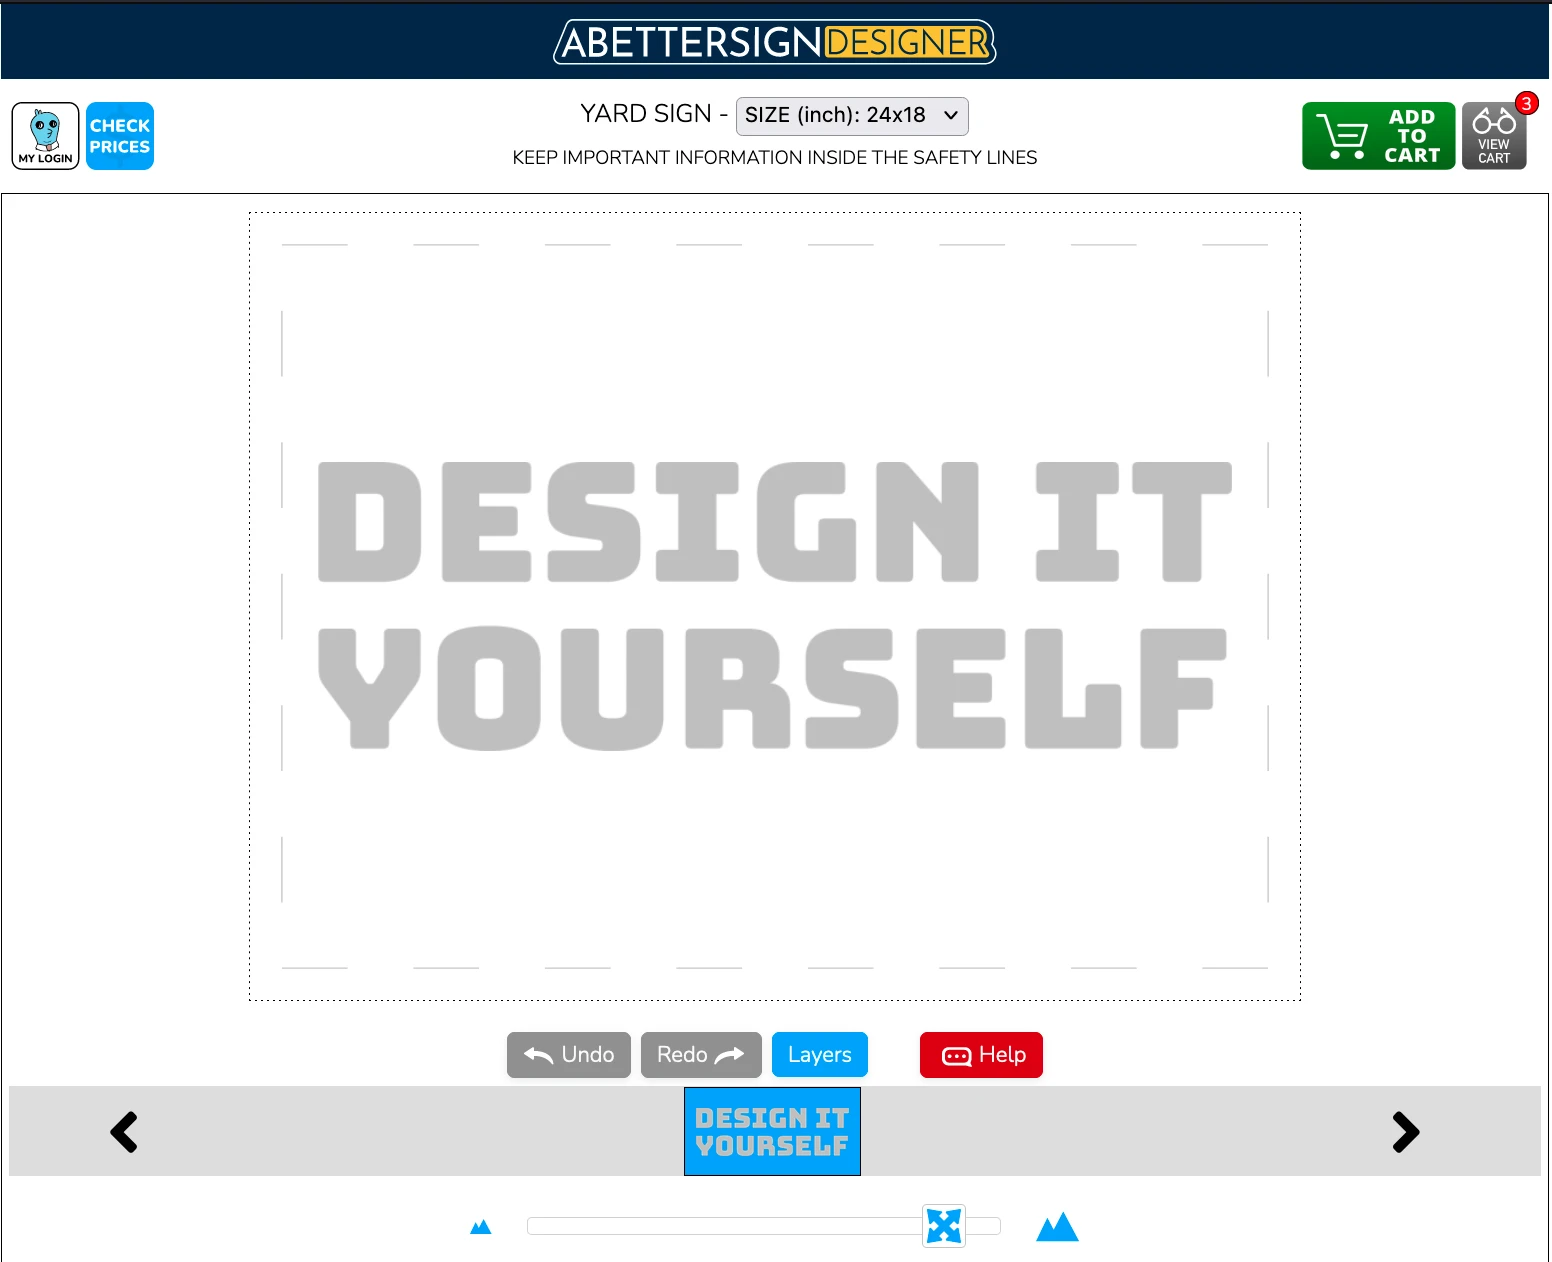 Design graduation signs online with the online designer